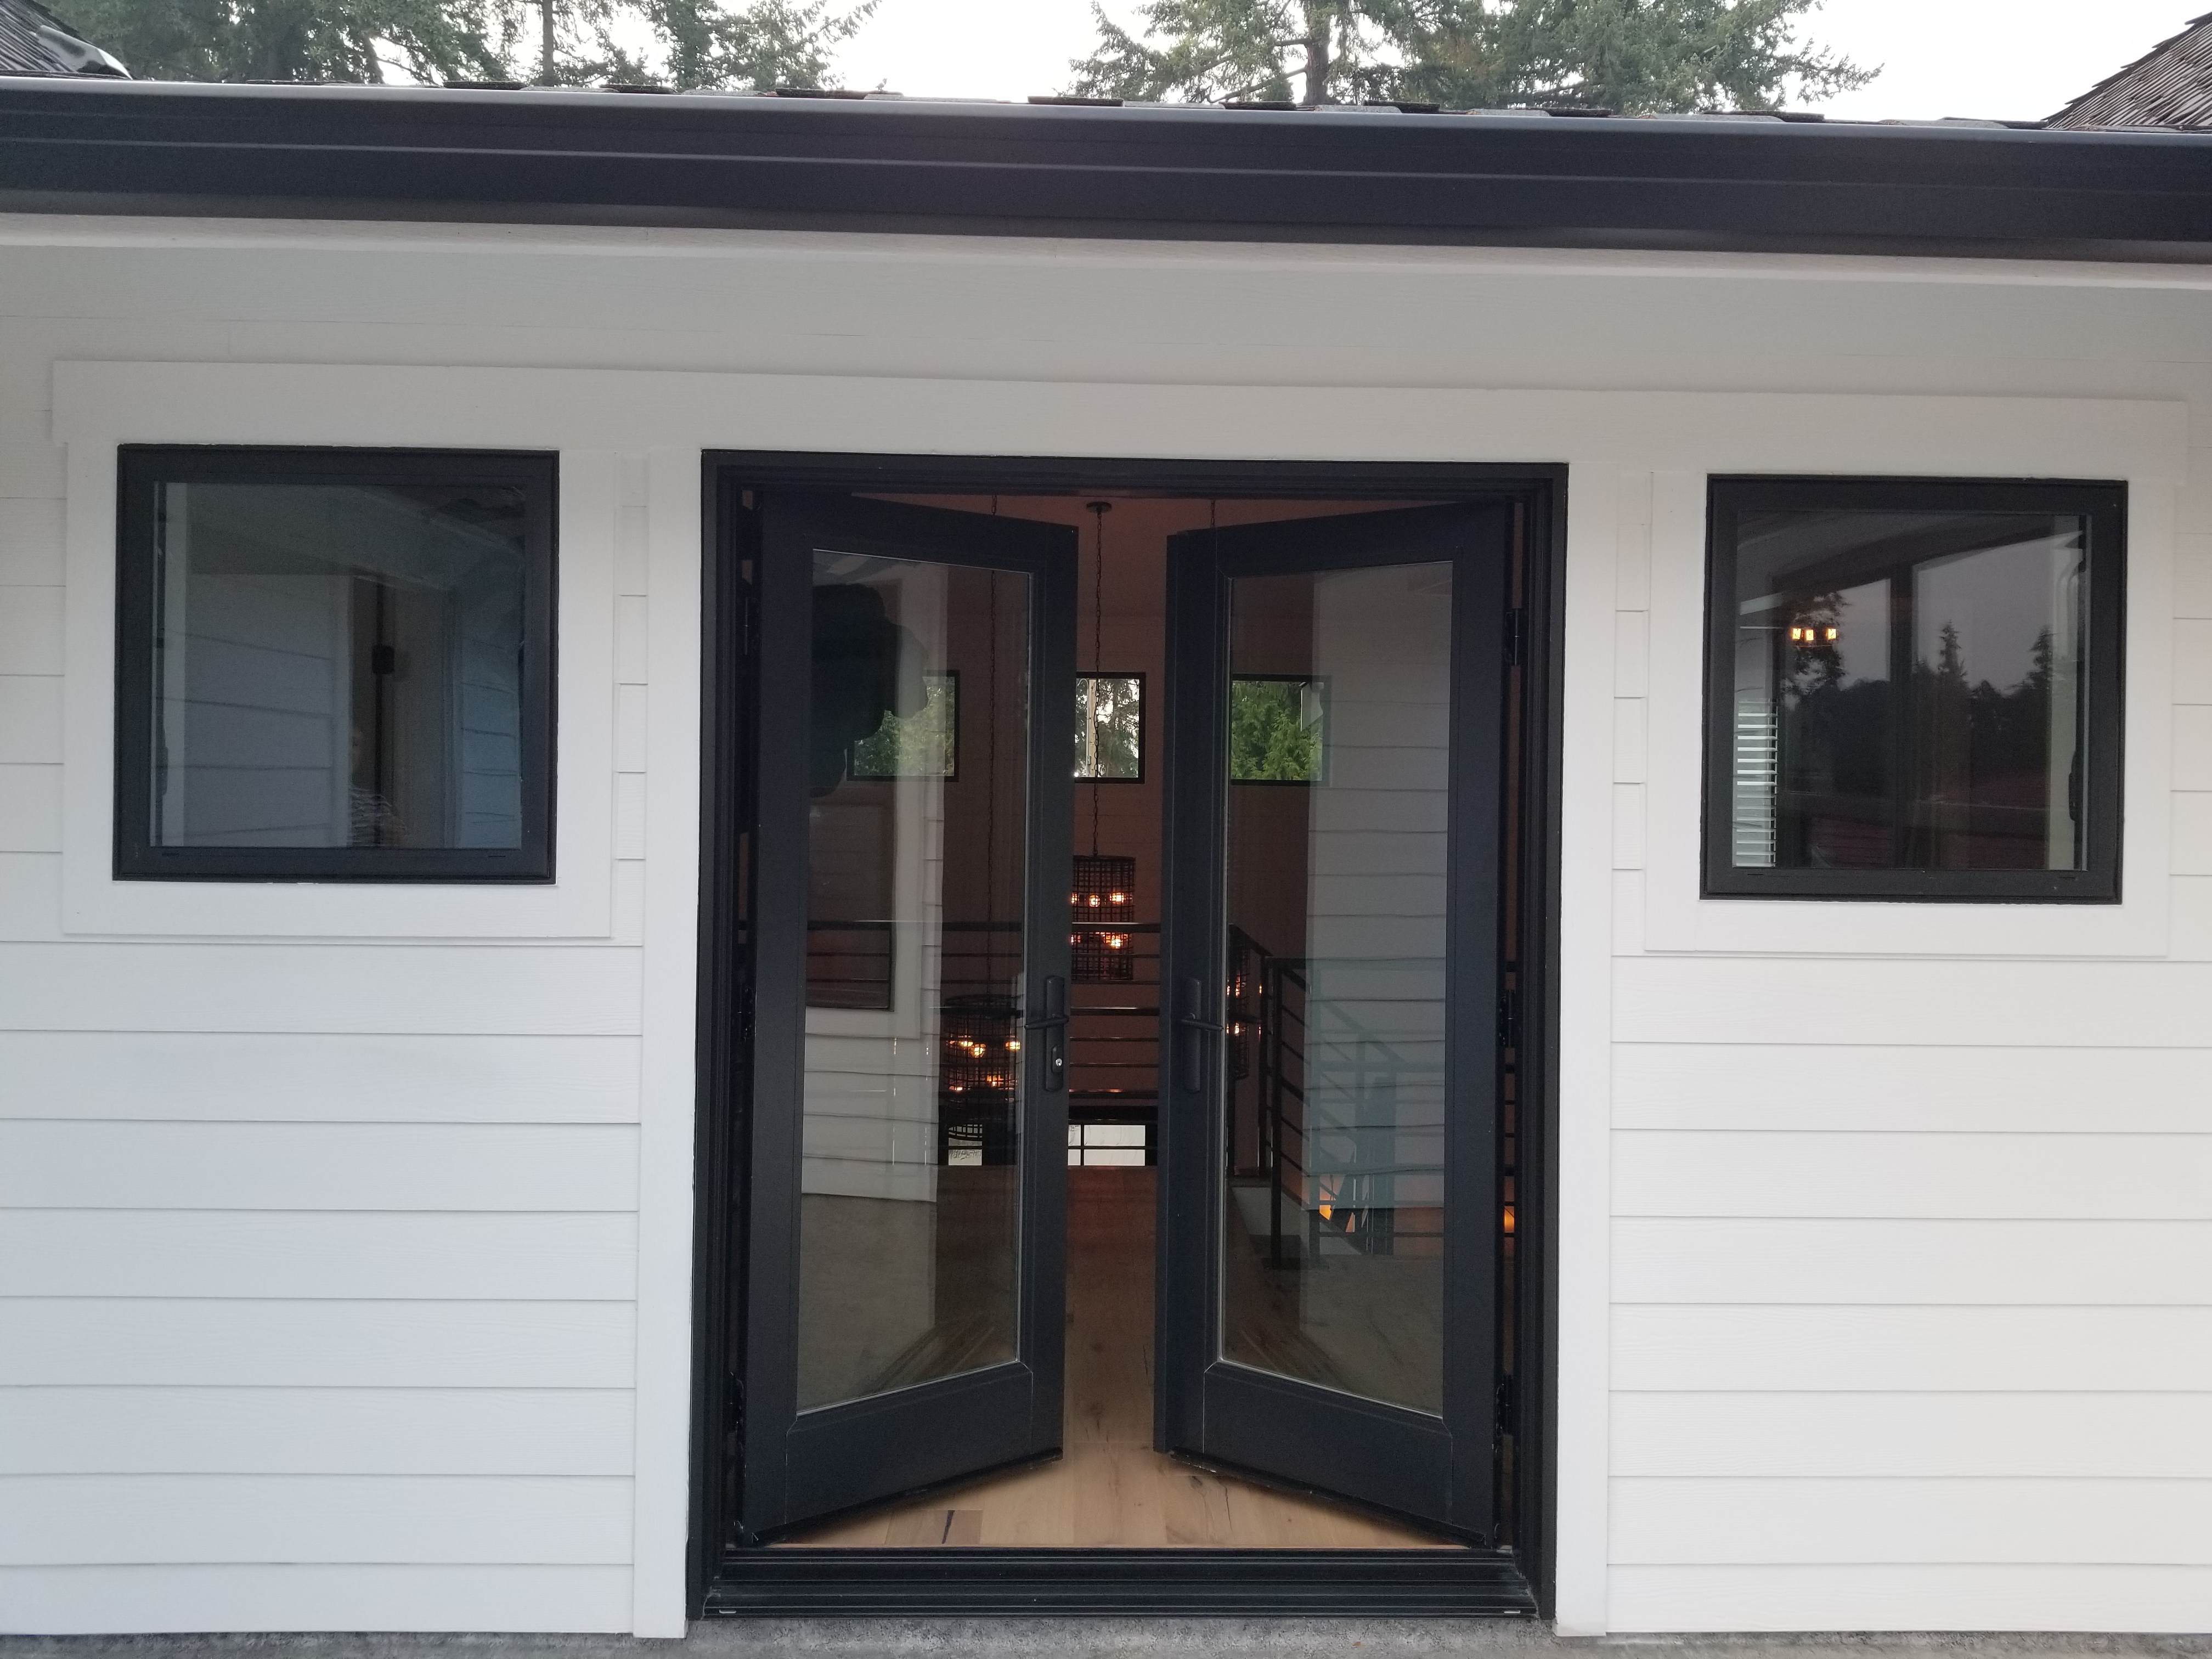 Inswing fiberglass patio doors in the color Black Bean